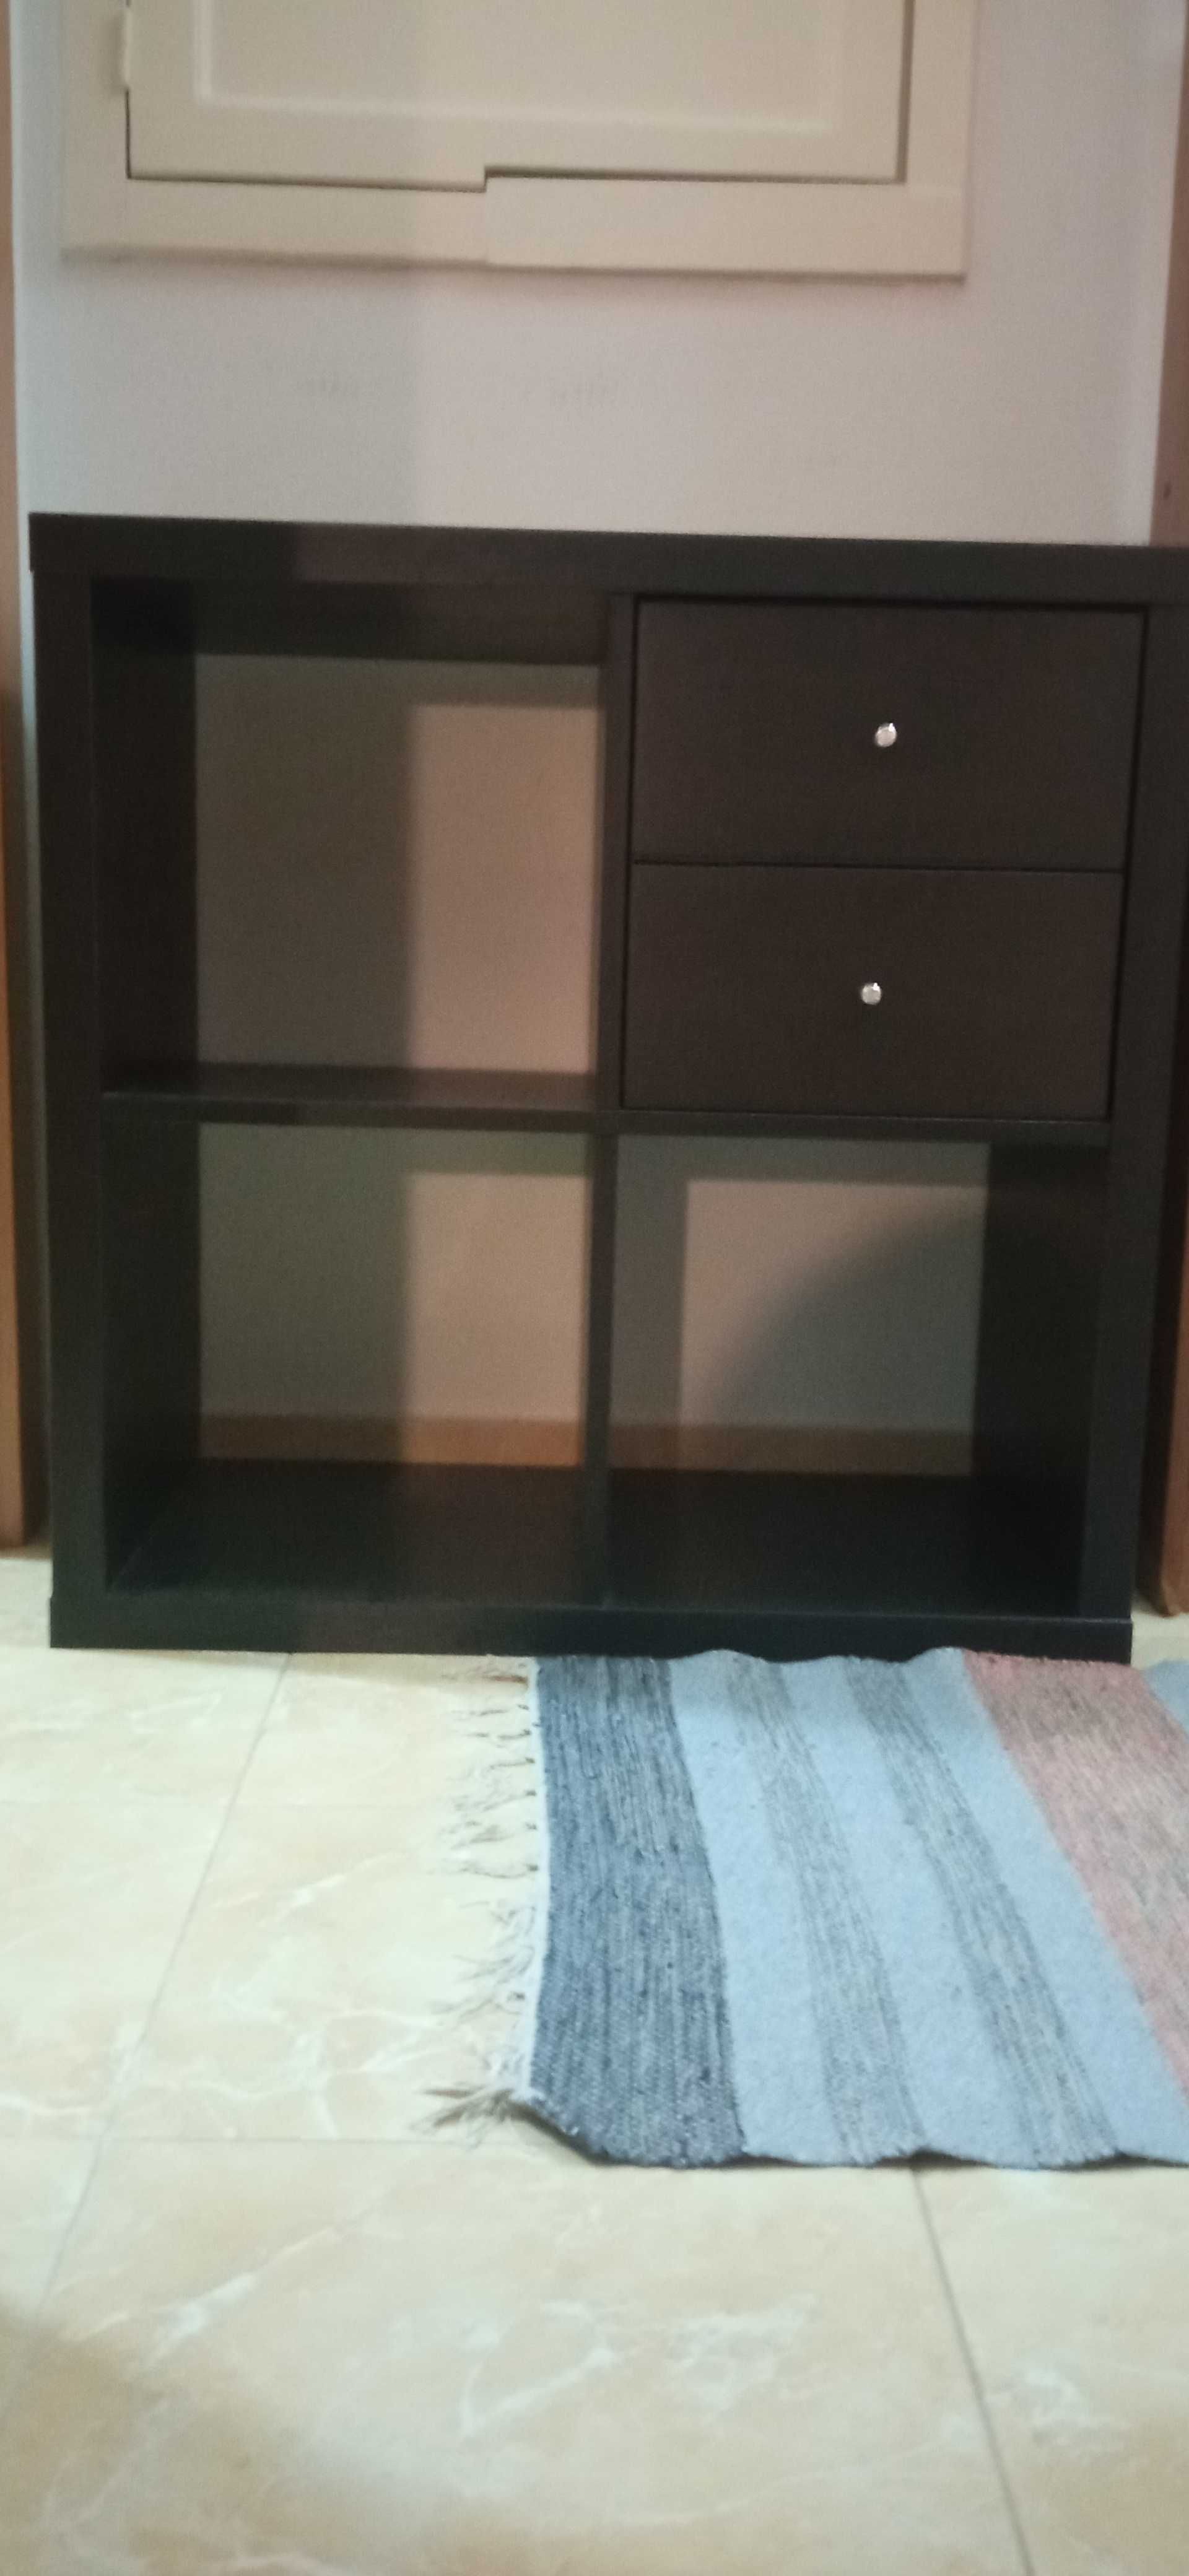 Móvel IKEA kalax (cubos) com gavetas